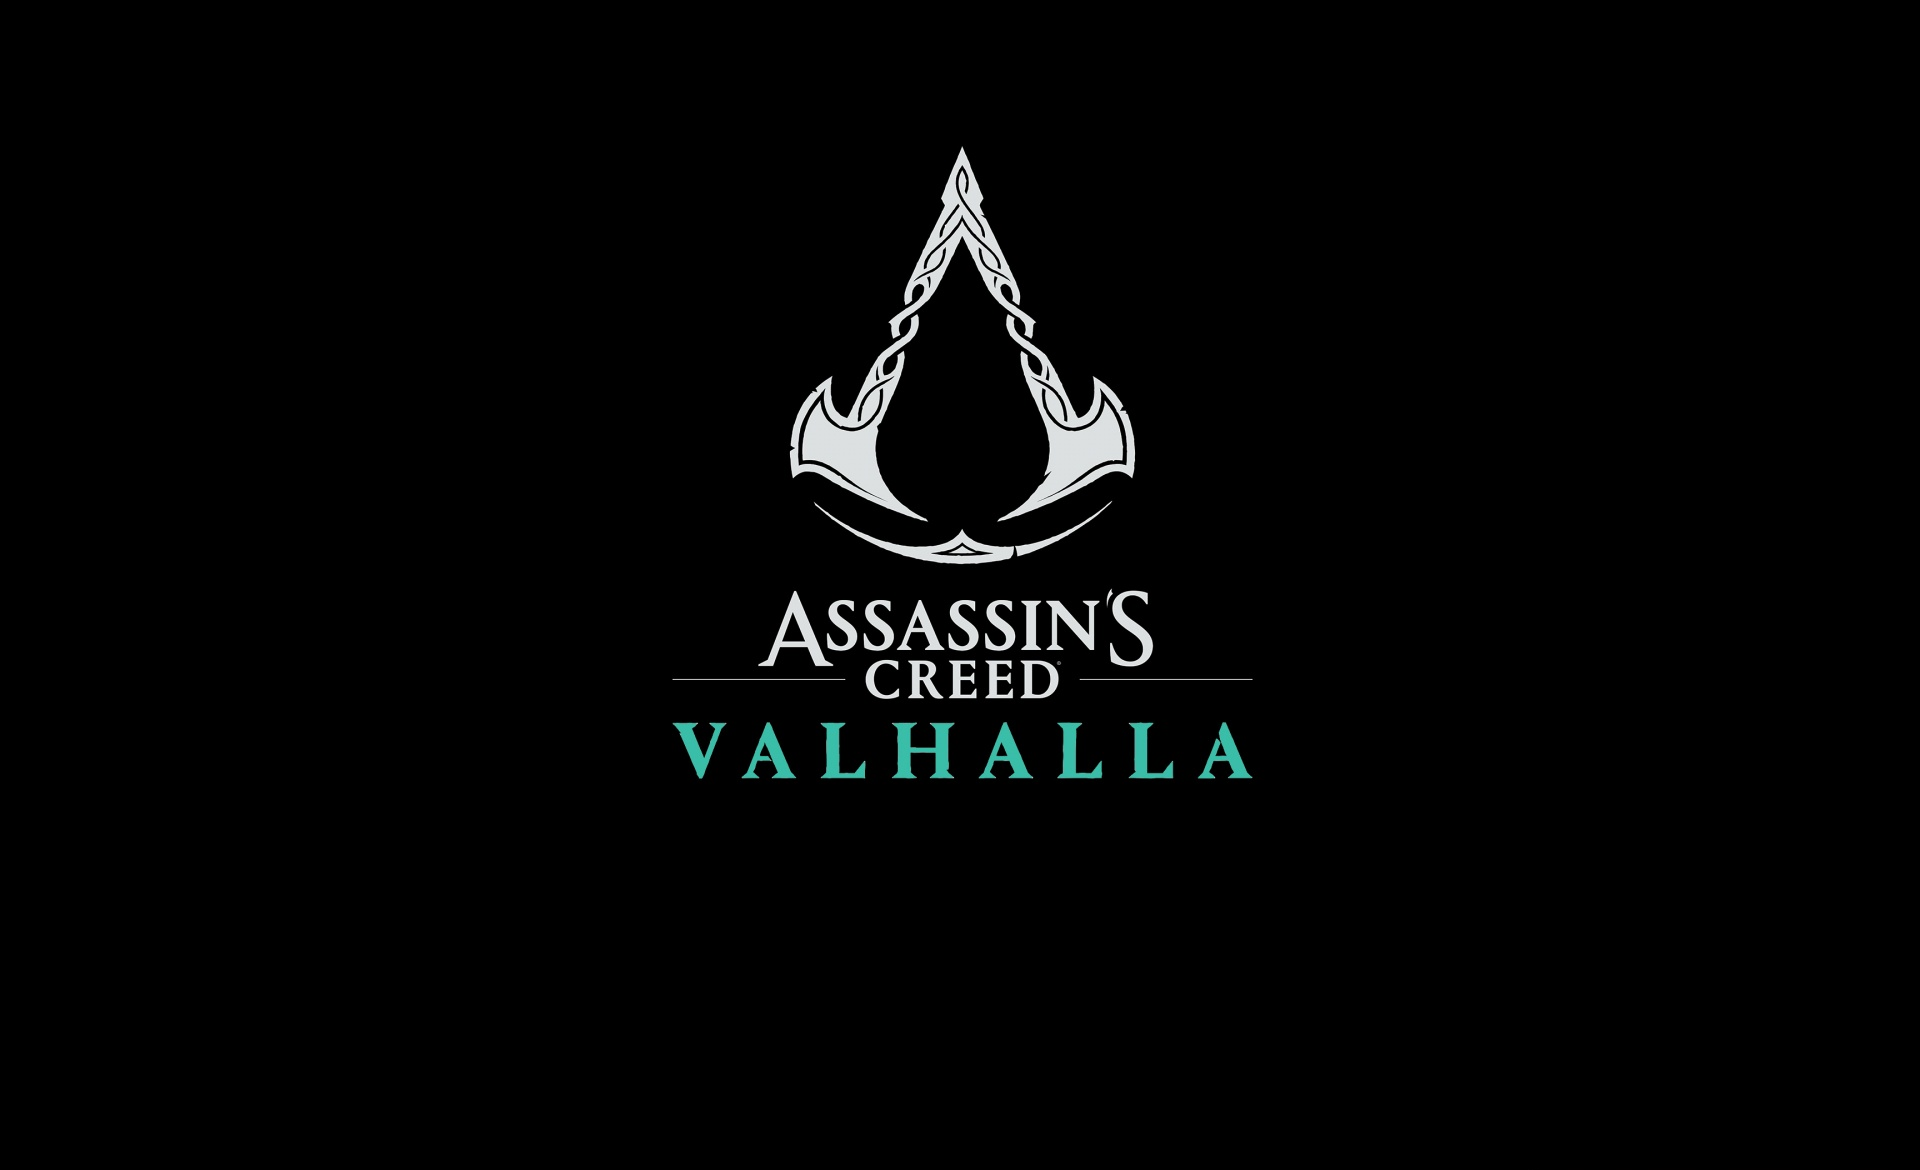 Assassin’s Creed Valhalla ขายหน่วยได้มากขึ้นในสัปดาห์แรกมากกว่าเกม Assassin’s Creed อื่น ๆ ก่อนหน้านี้